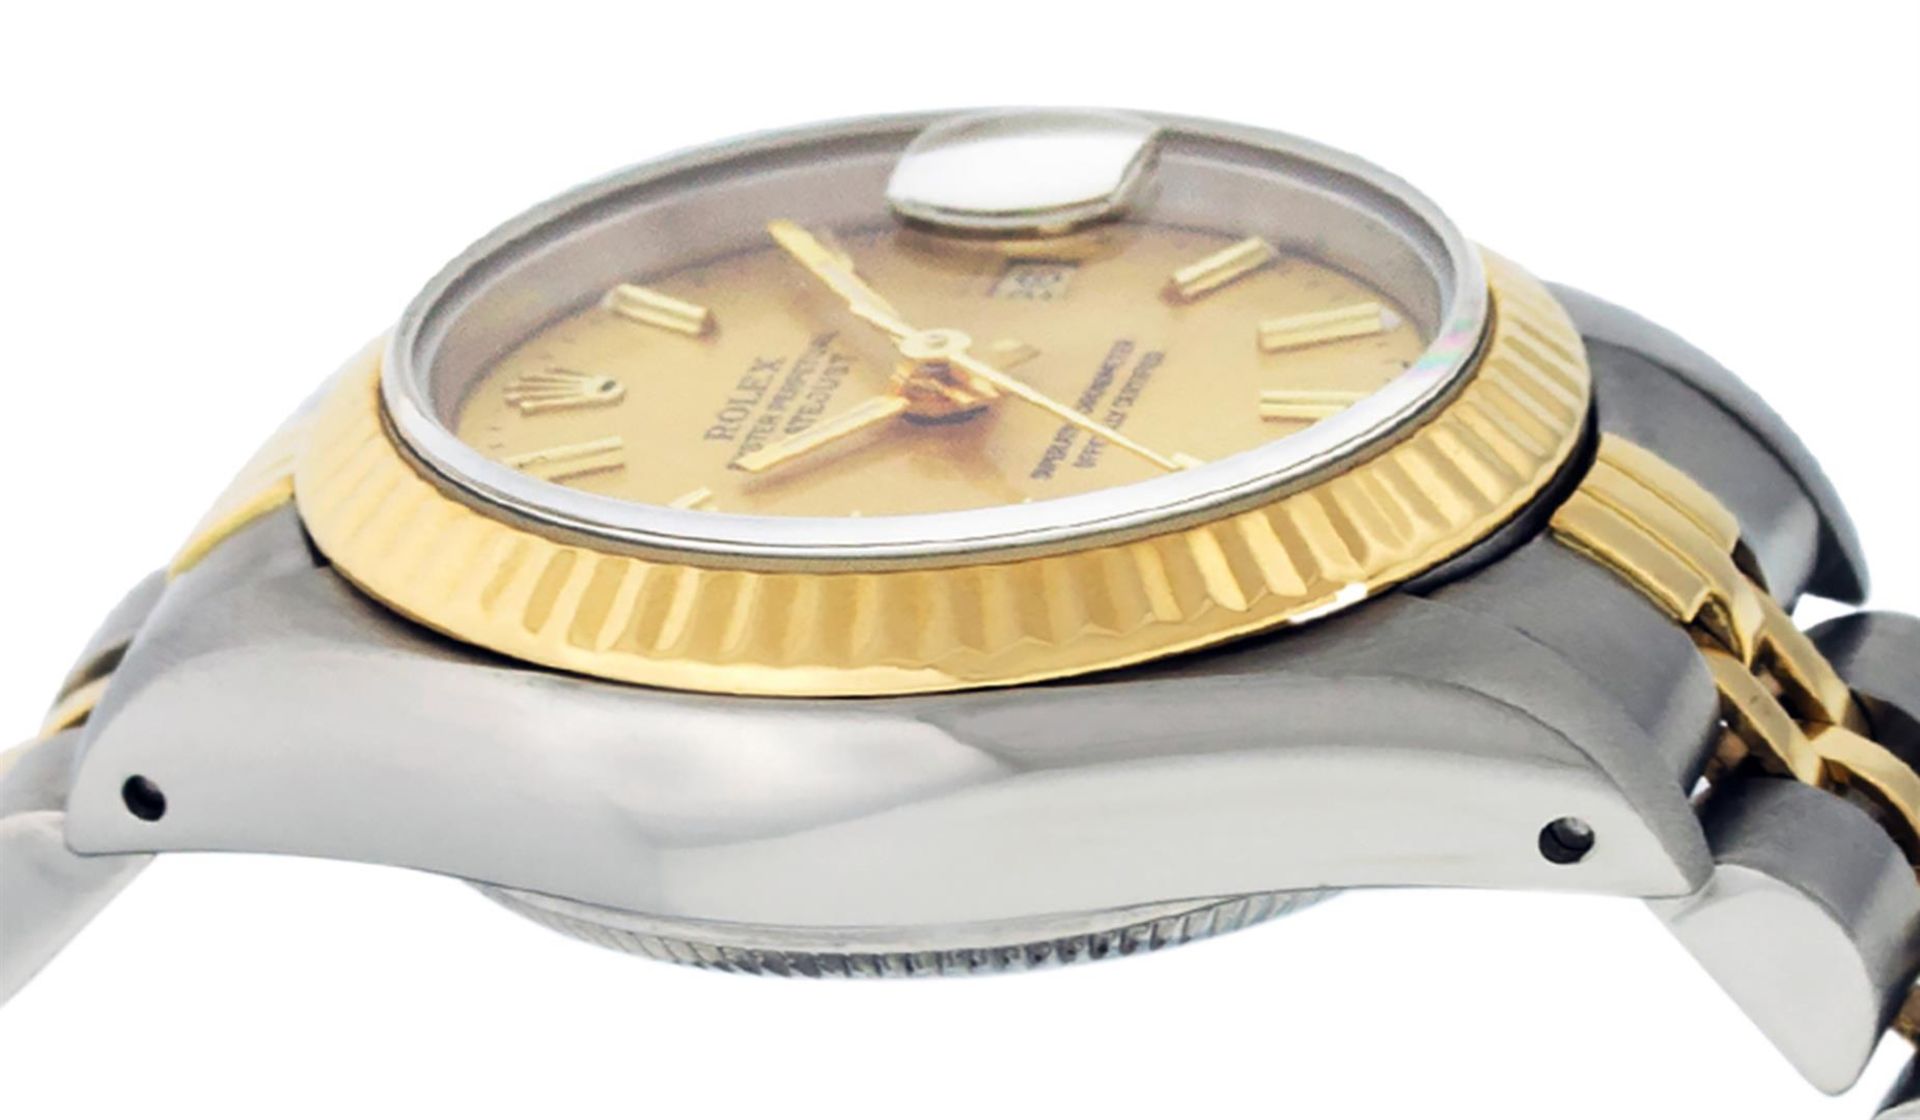 Rolex Ladies 2 Tone Champagne Index Datejust Wristwatch - Image 3 of 8